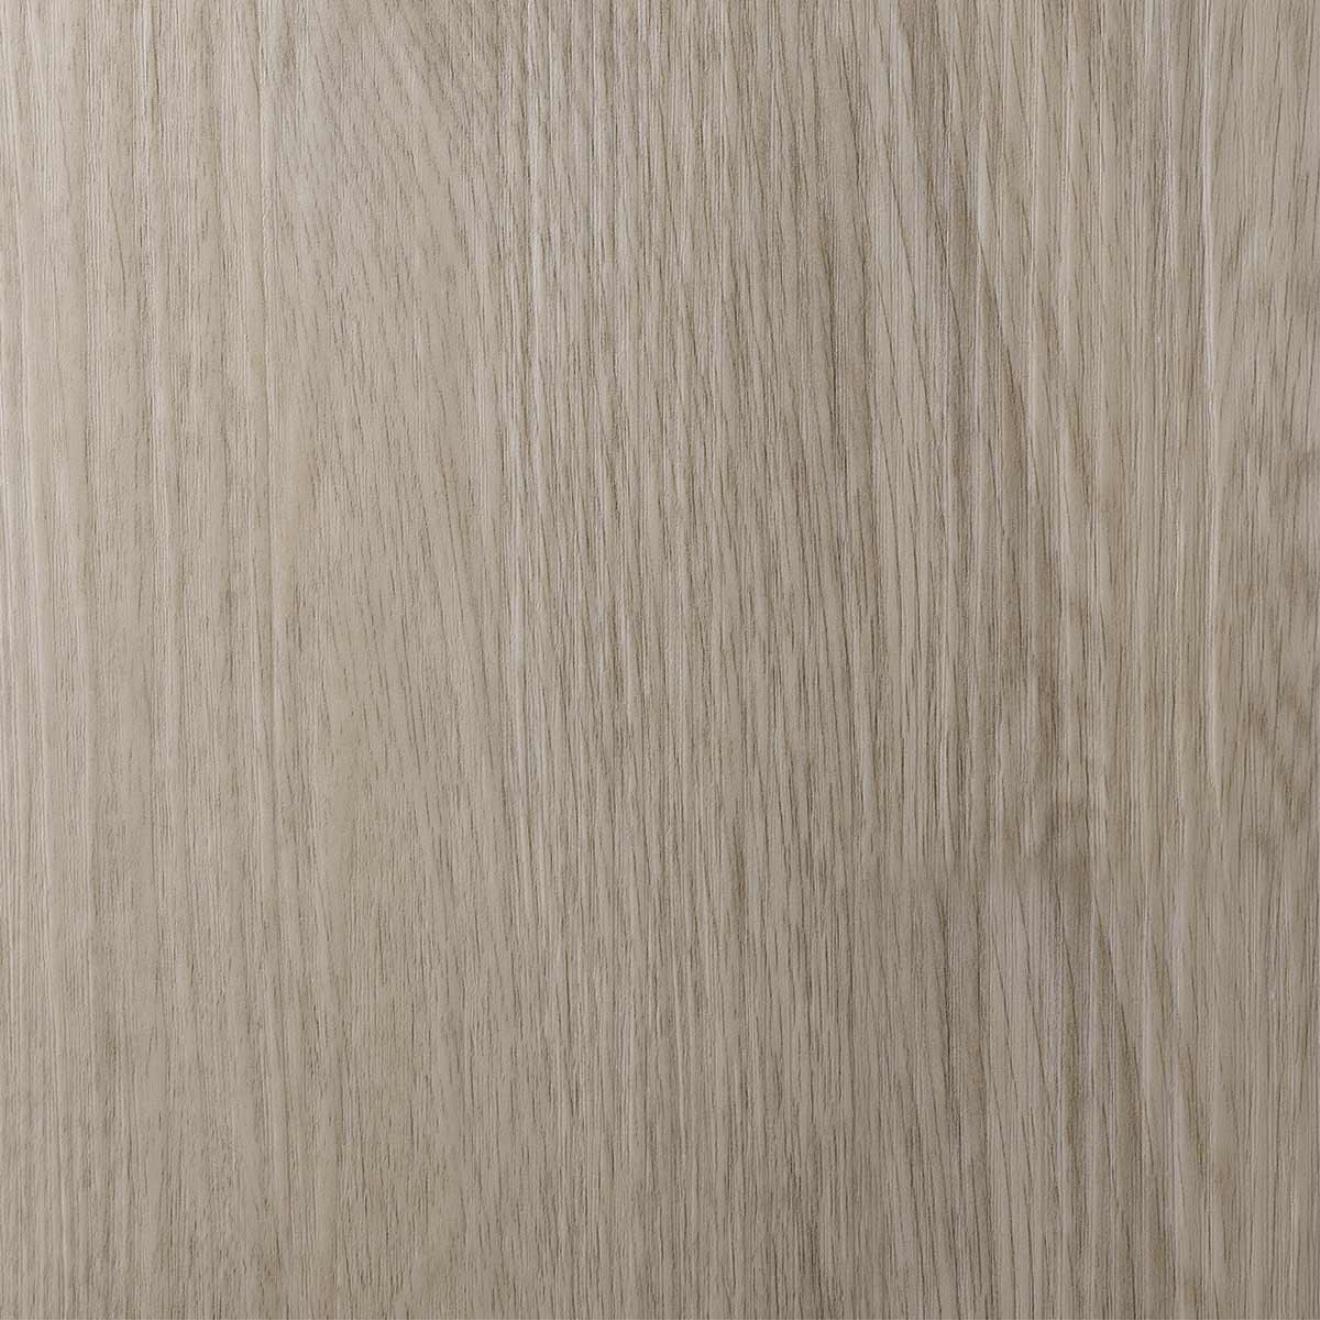 Hydro Step 5G Click LVT Flooring Welsh Oak with Underlay